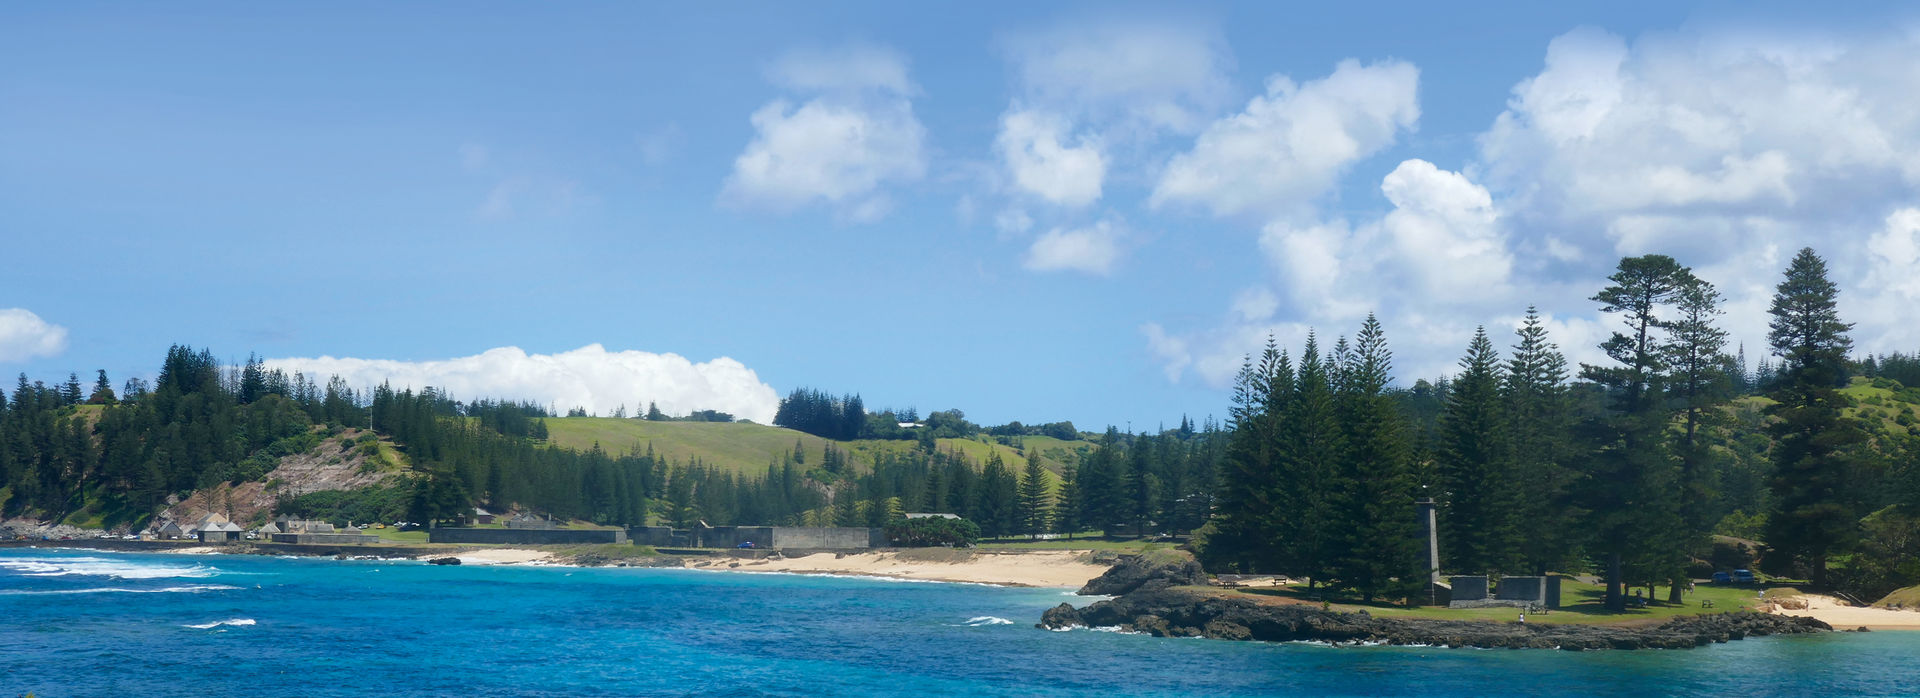 Brian's trip to Norfolk Island